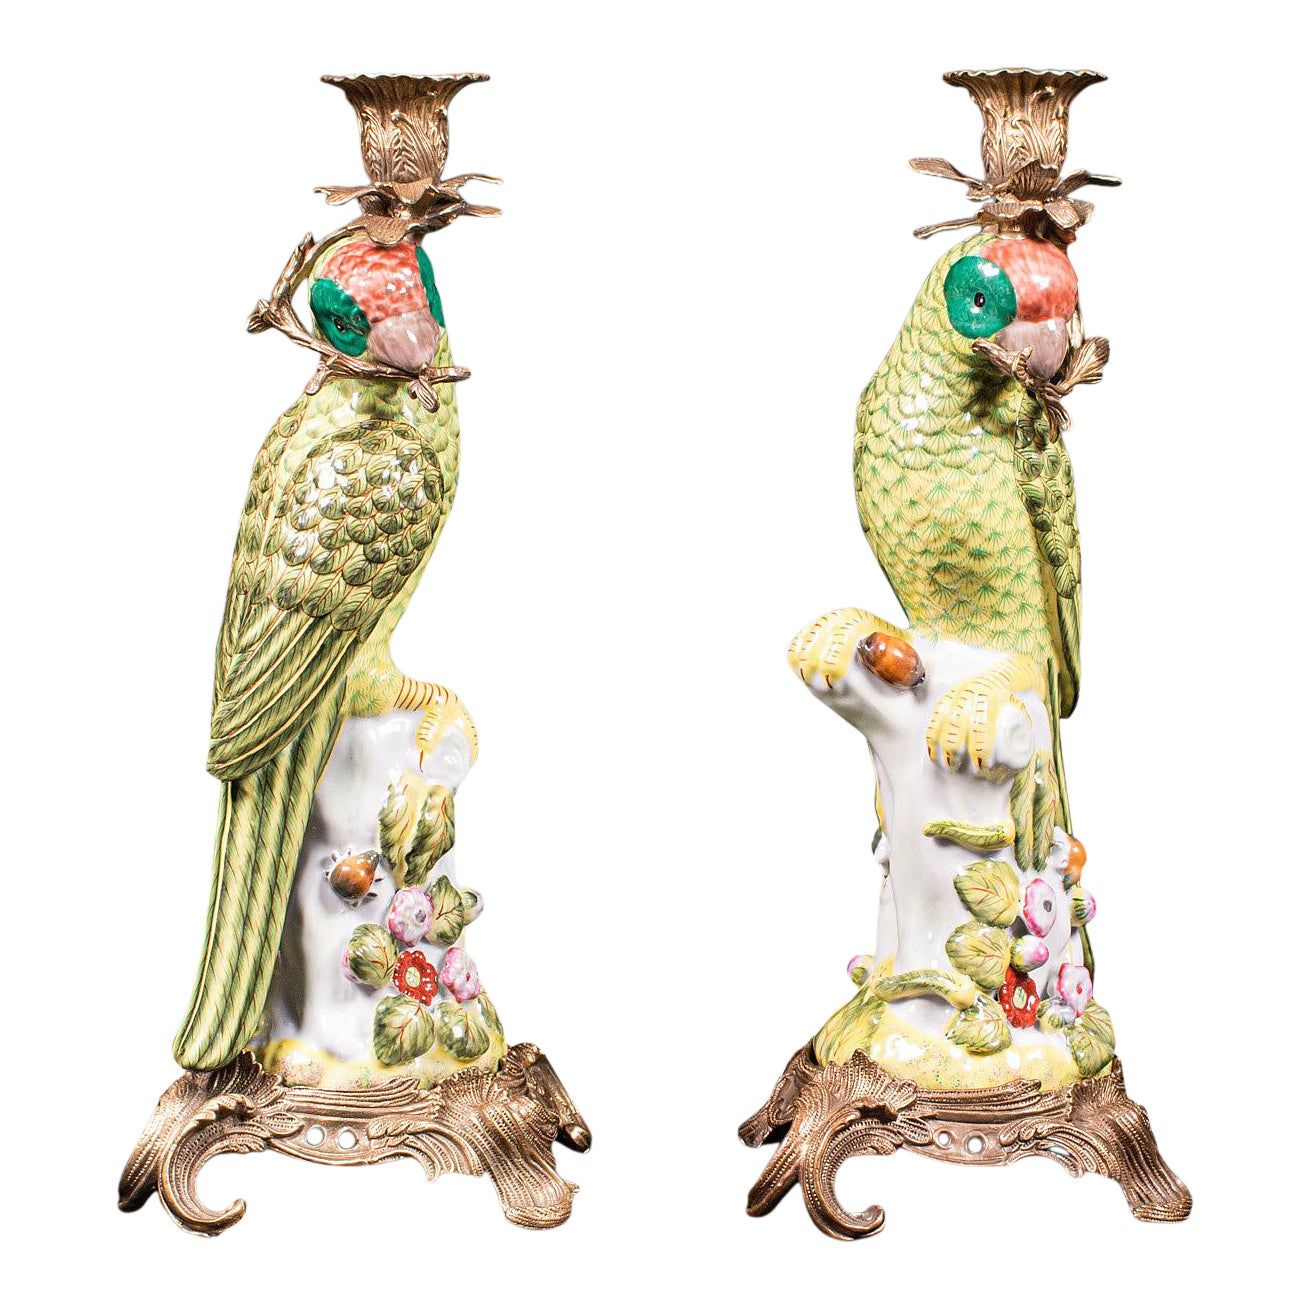 1980s Ceramic Oriental Decorative Candlesticks - a Pair